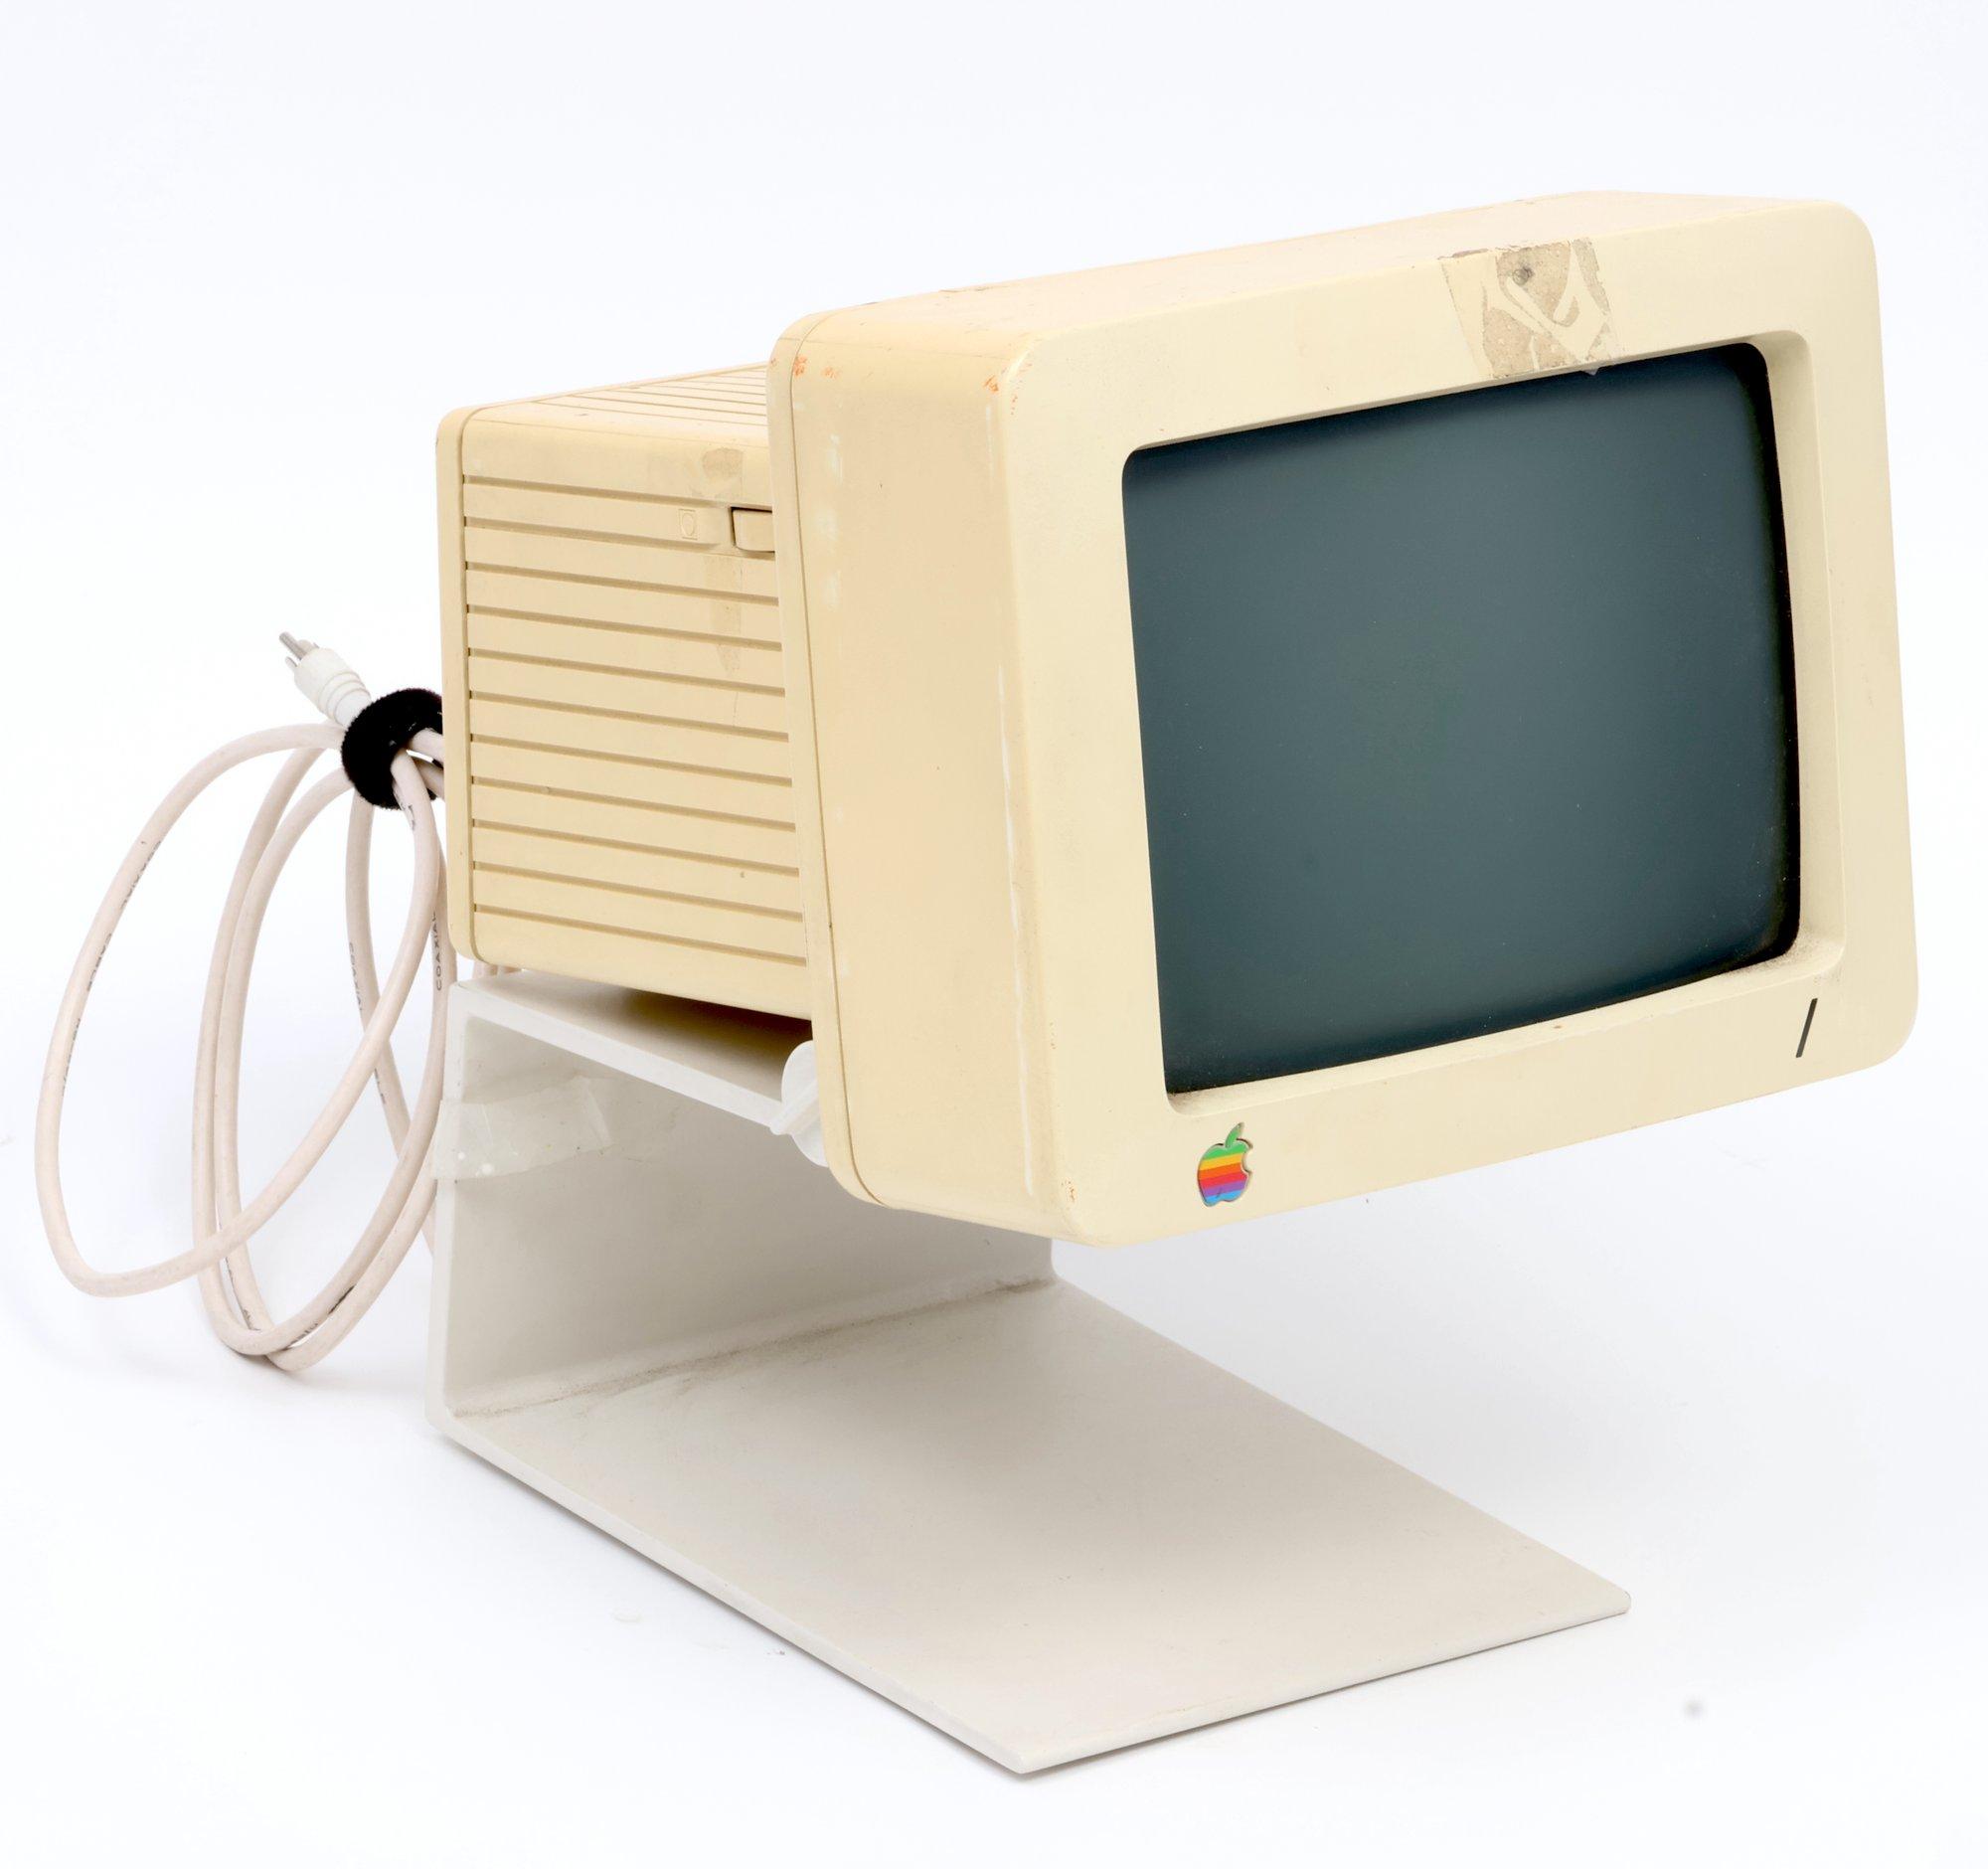 Vintage Apple Monitor Model G090S For Apple IIc